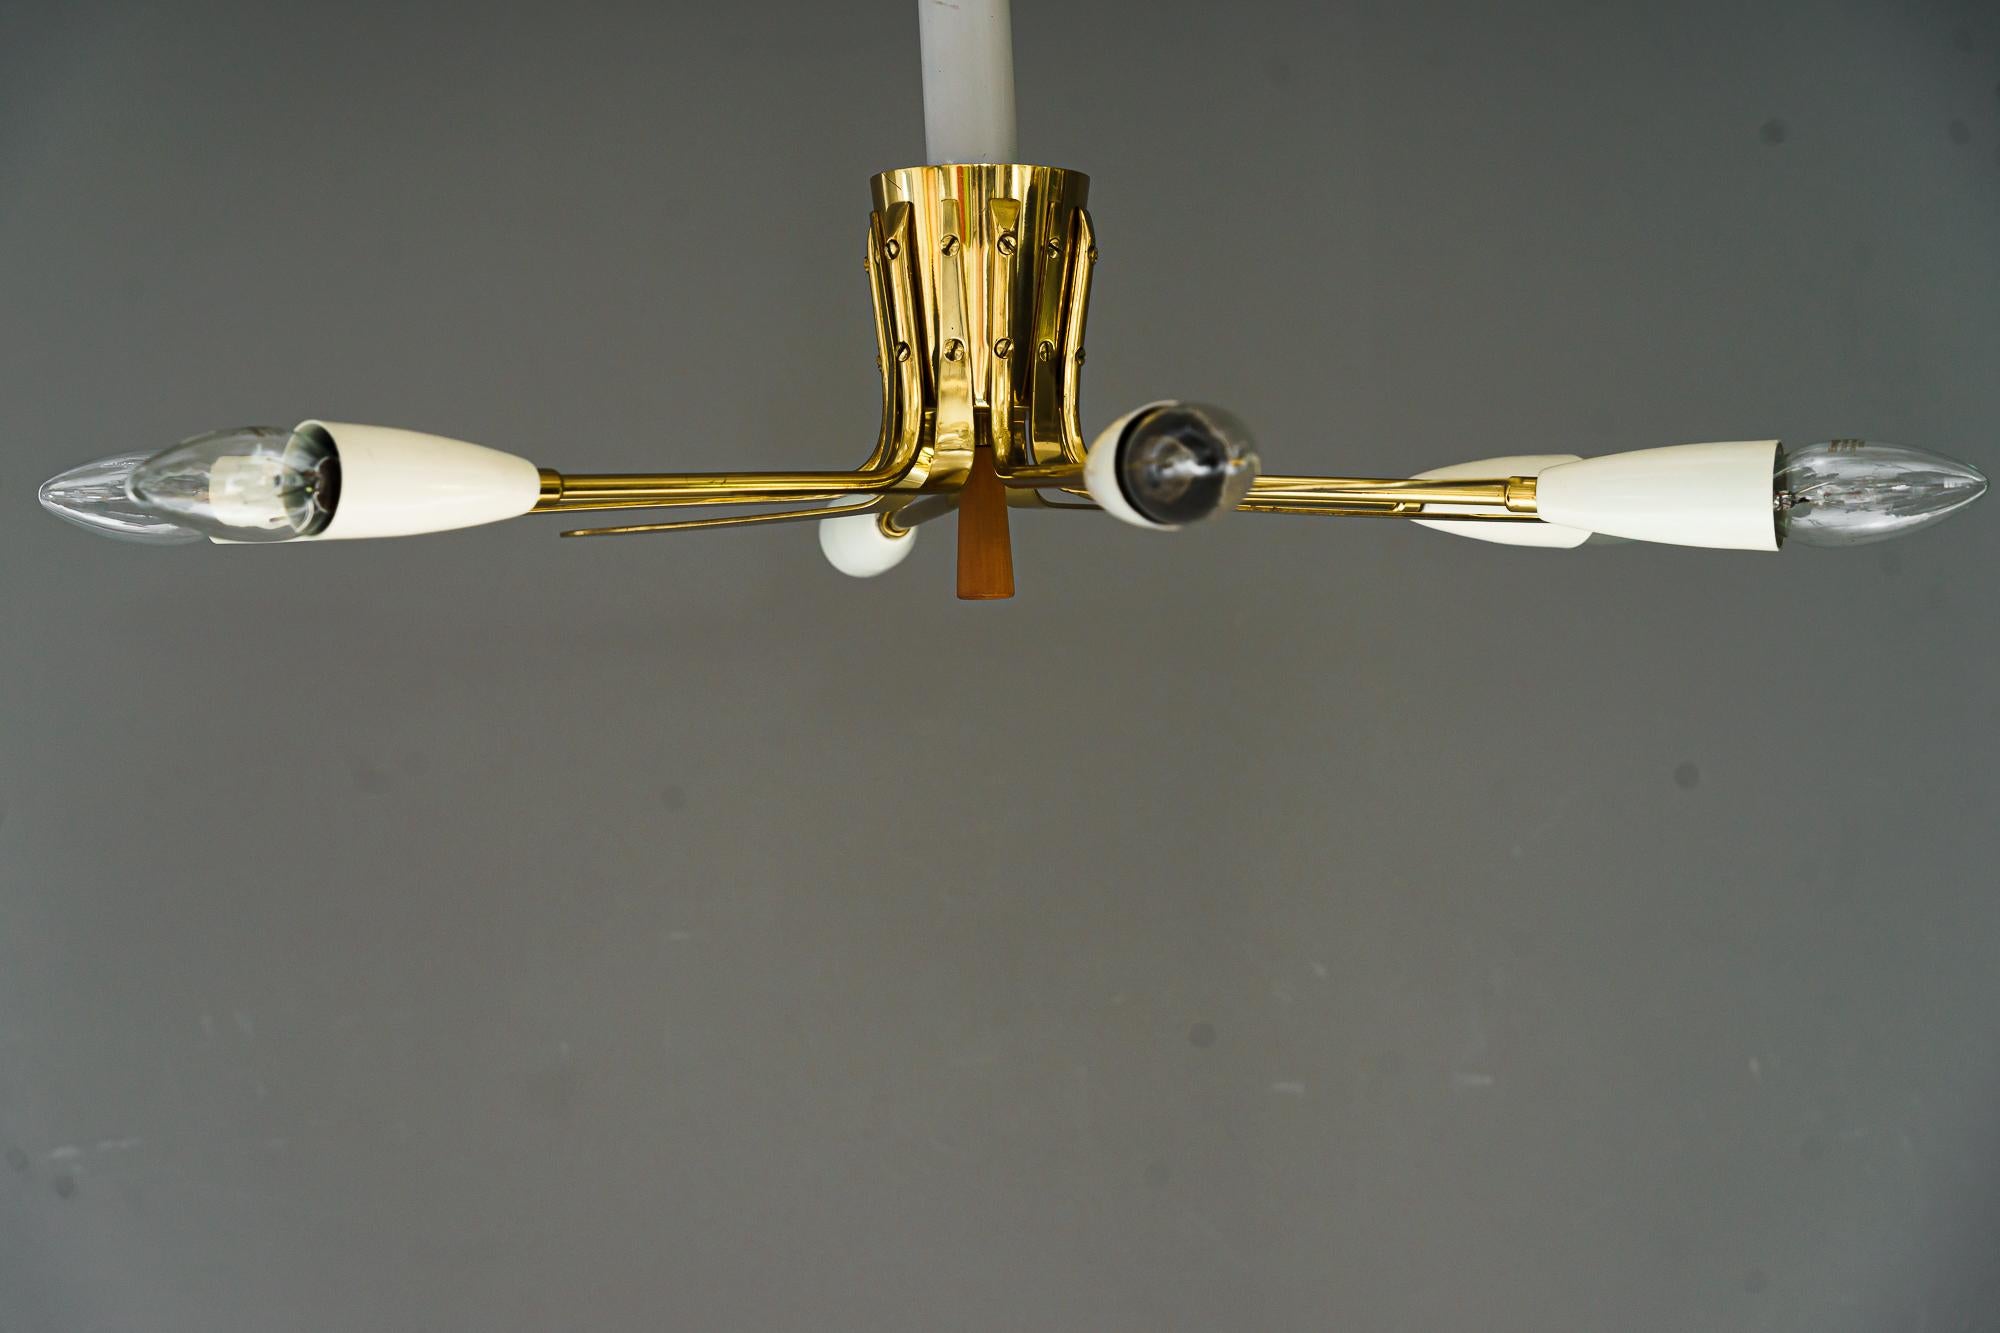 2x Sputnik Flush Mount Designed by Rupert Nikoll, Vienna 1950
Original condition
Pair price.